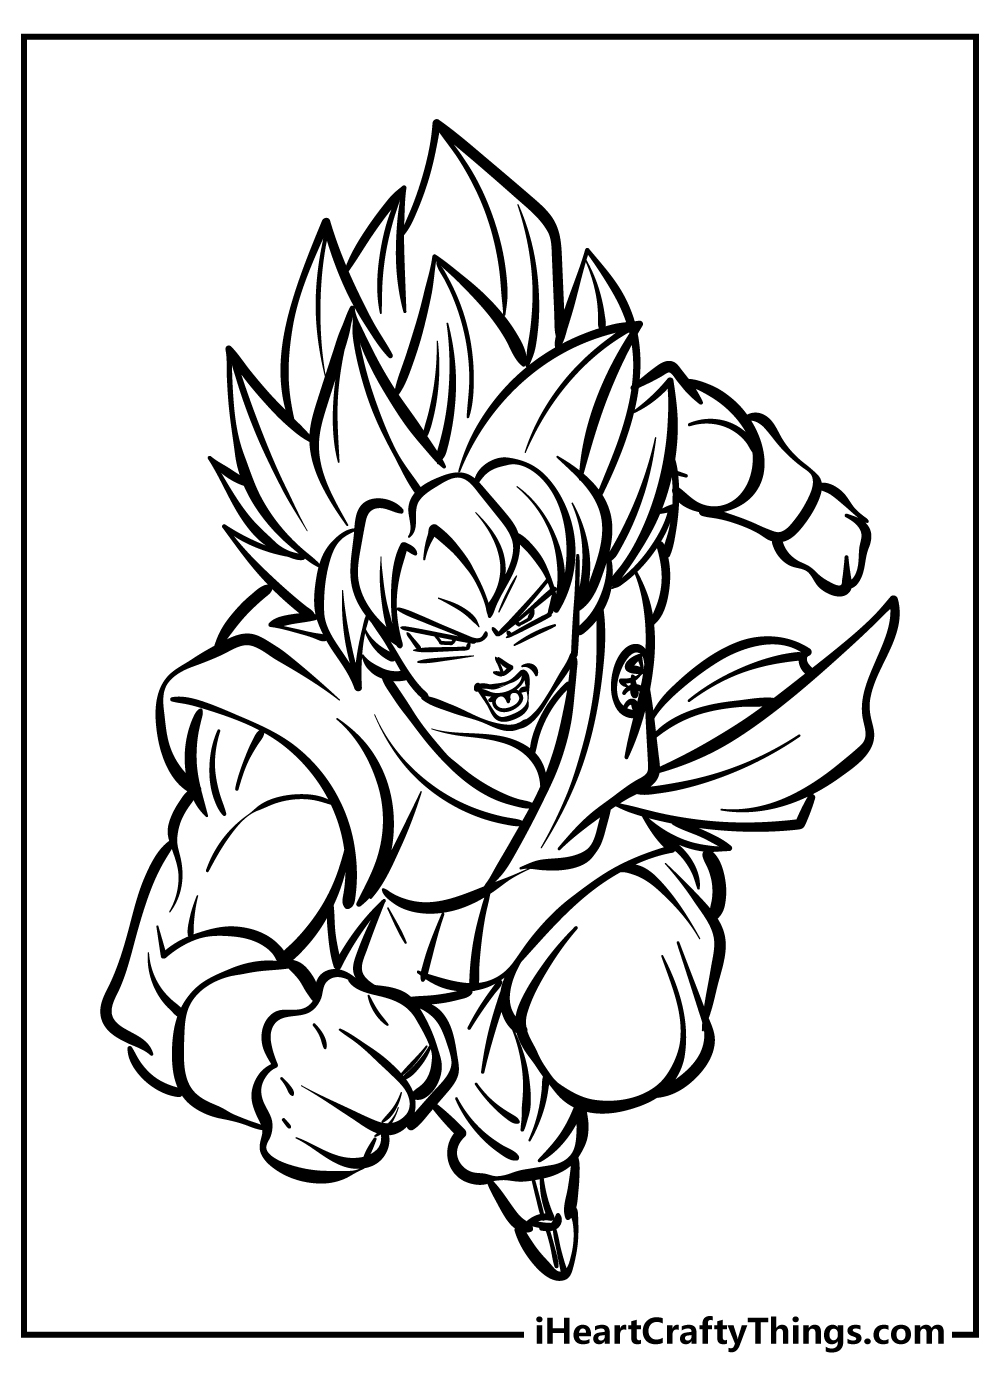 Goku Coloring Pages free pdf download